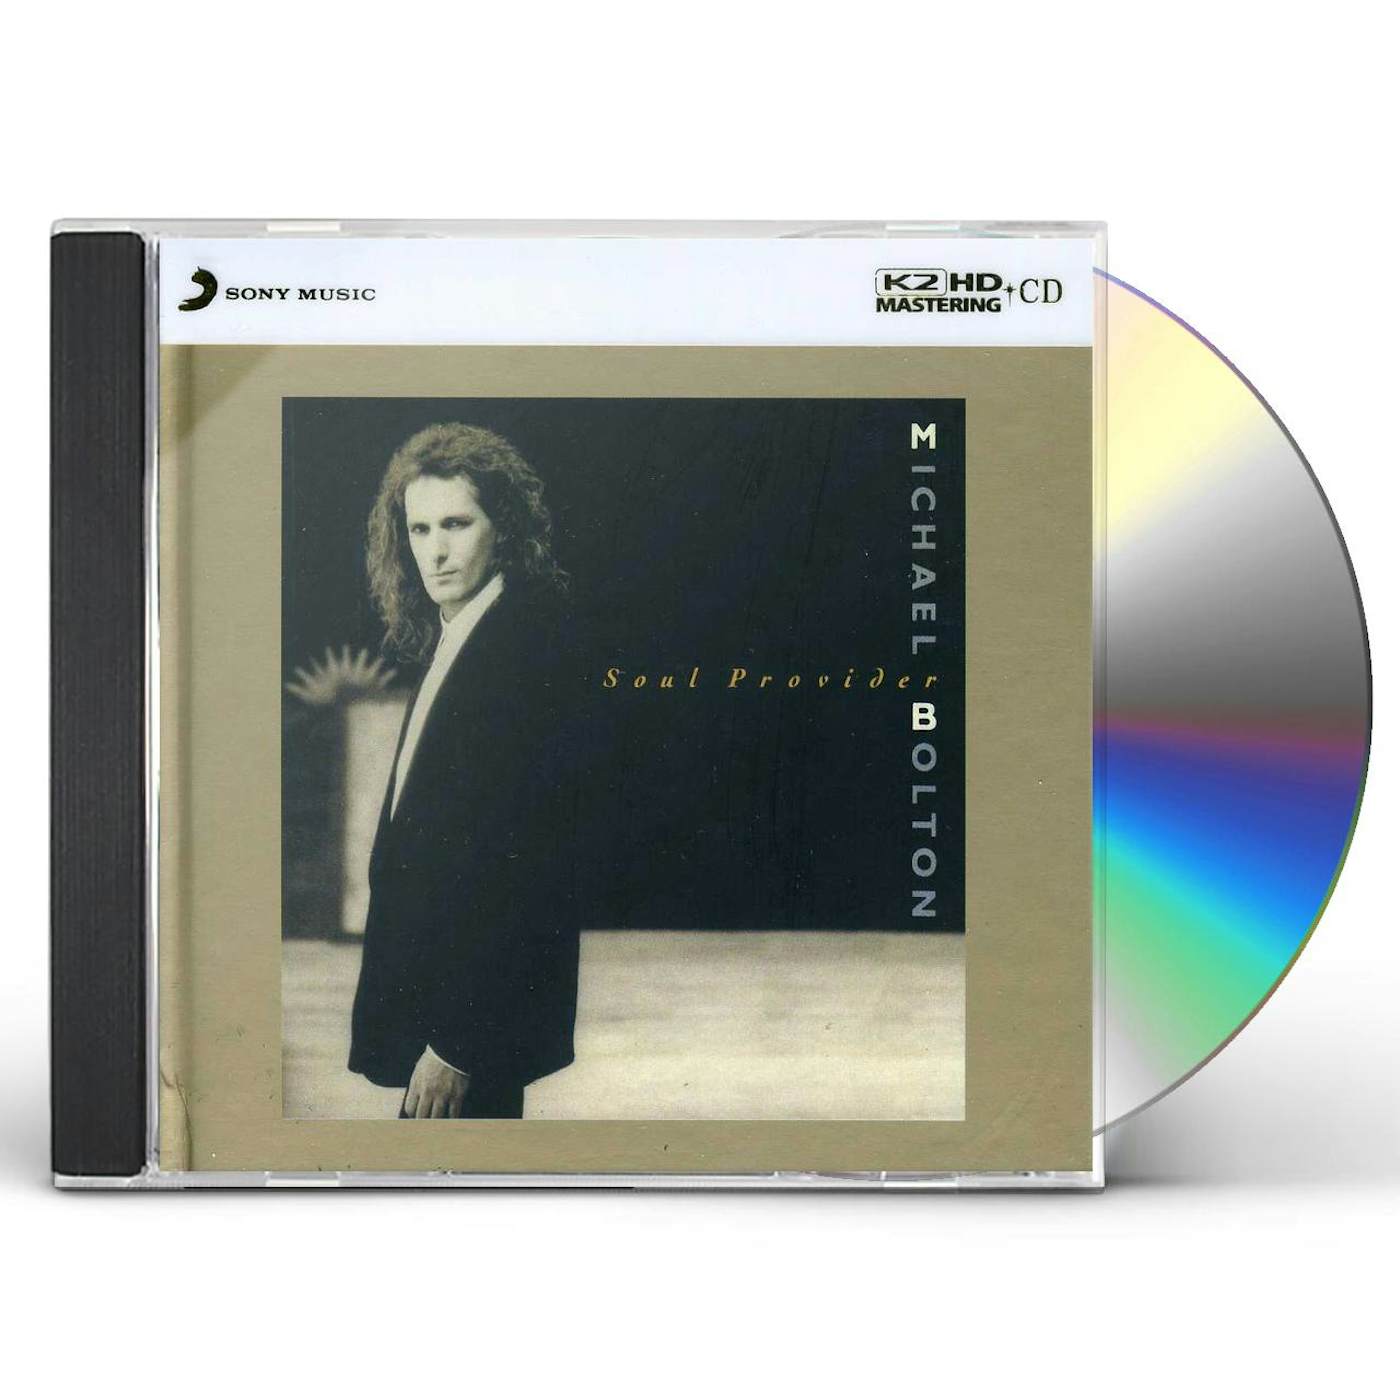 Michael Bolton SOUL PROVIDER: K2HD MASTERING CD